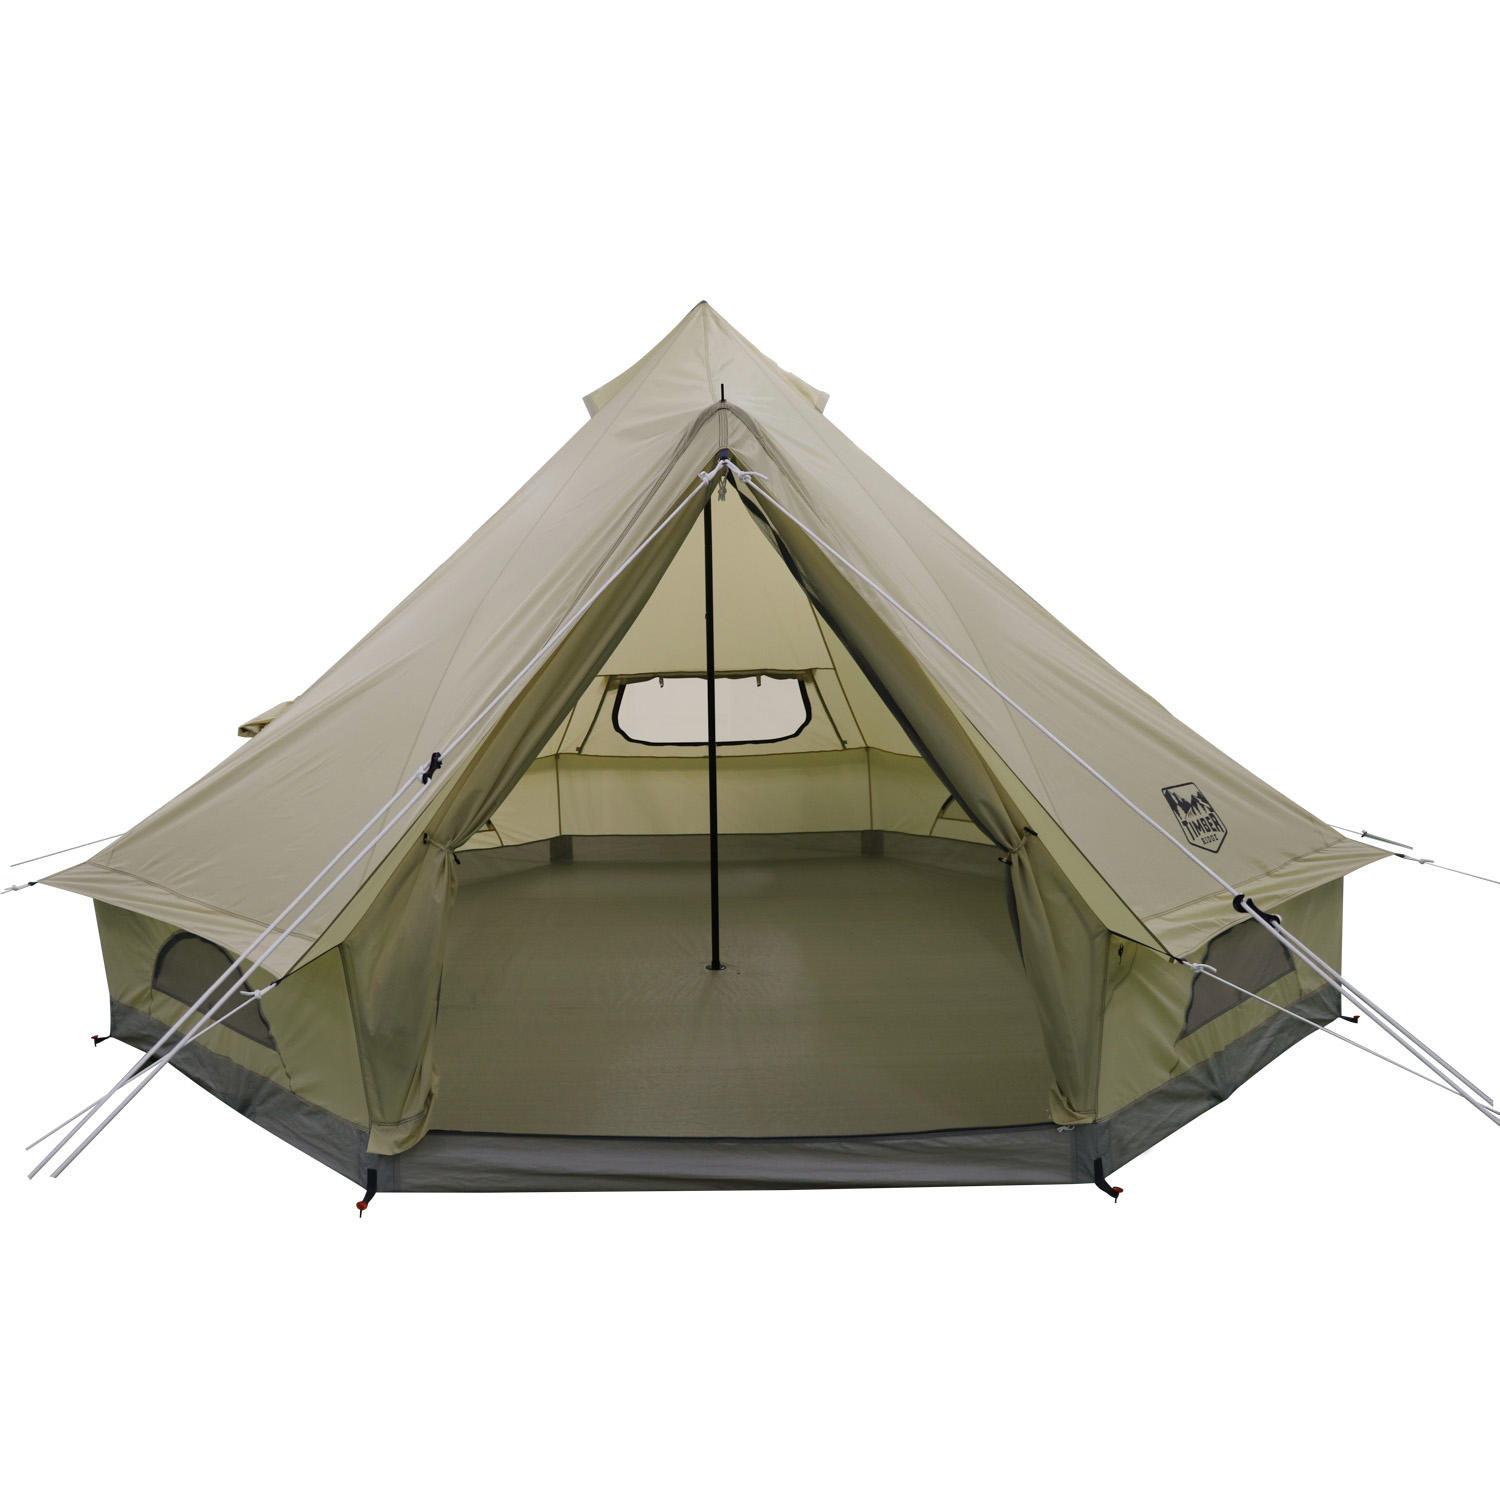 Timber Ridge 6 Person Yurt Glamping Water-Resistant Tent (67 x 71")